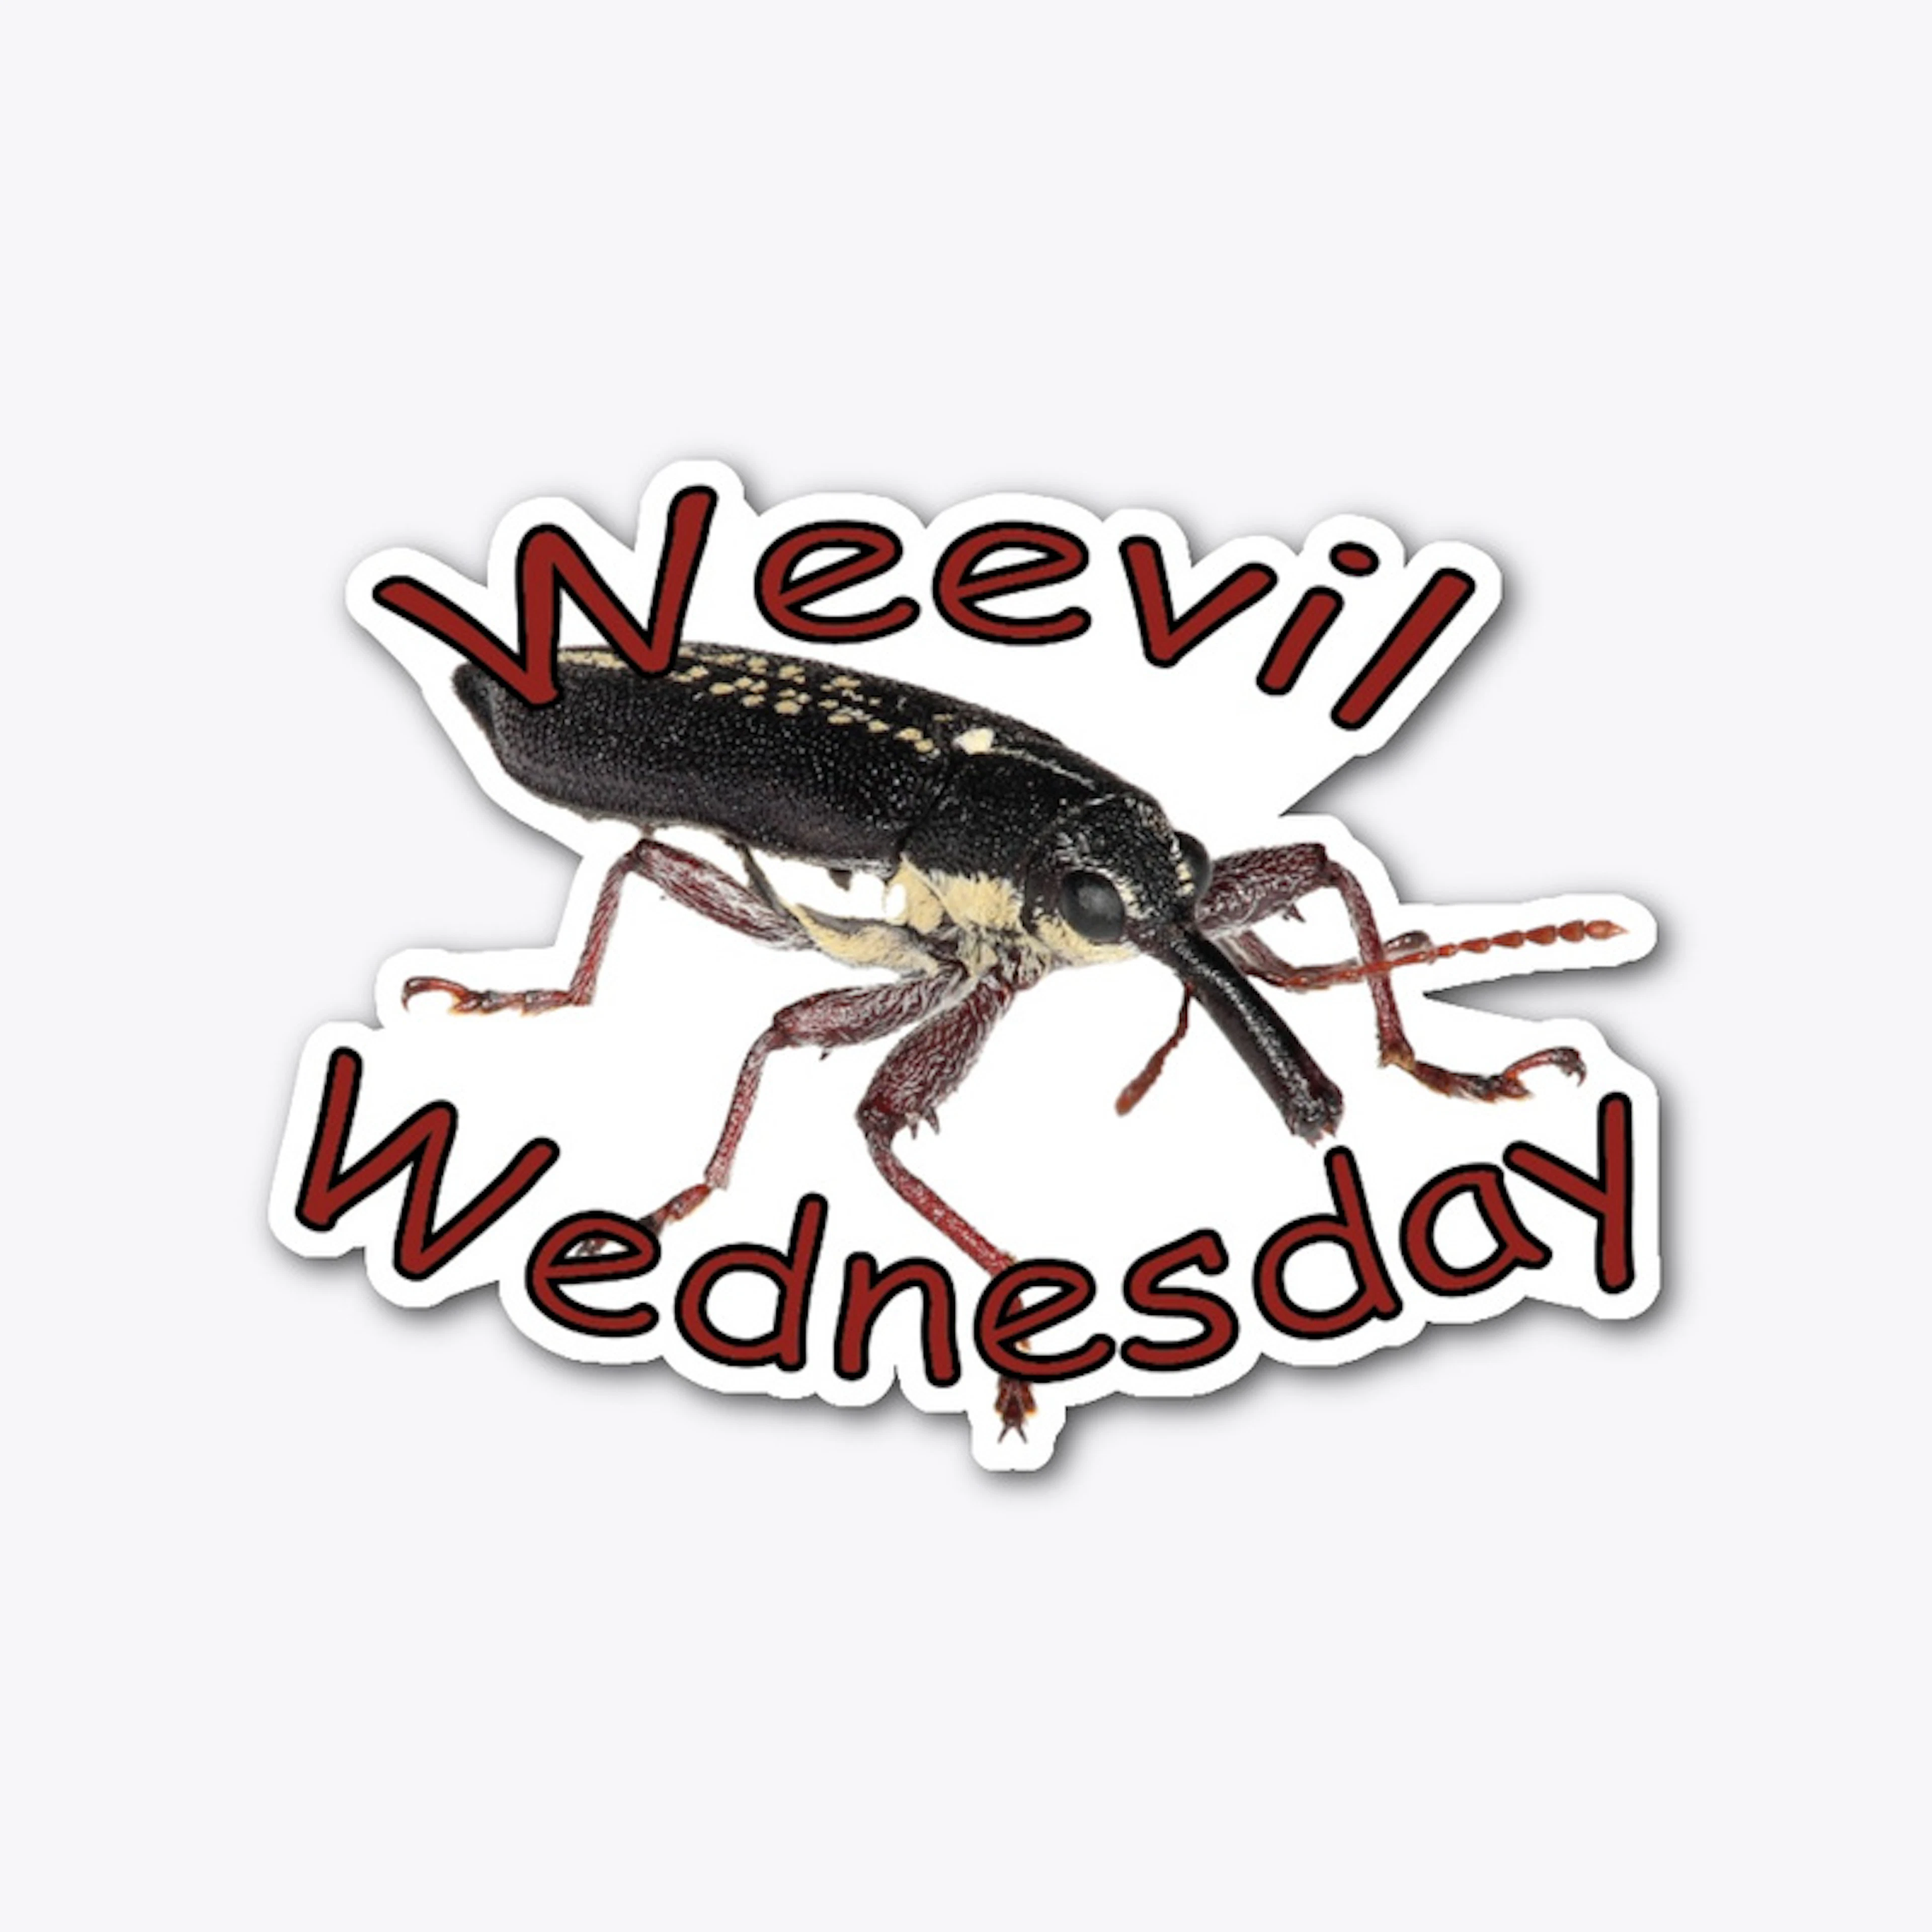 Weevil Wednesday